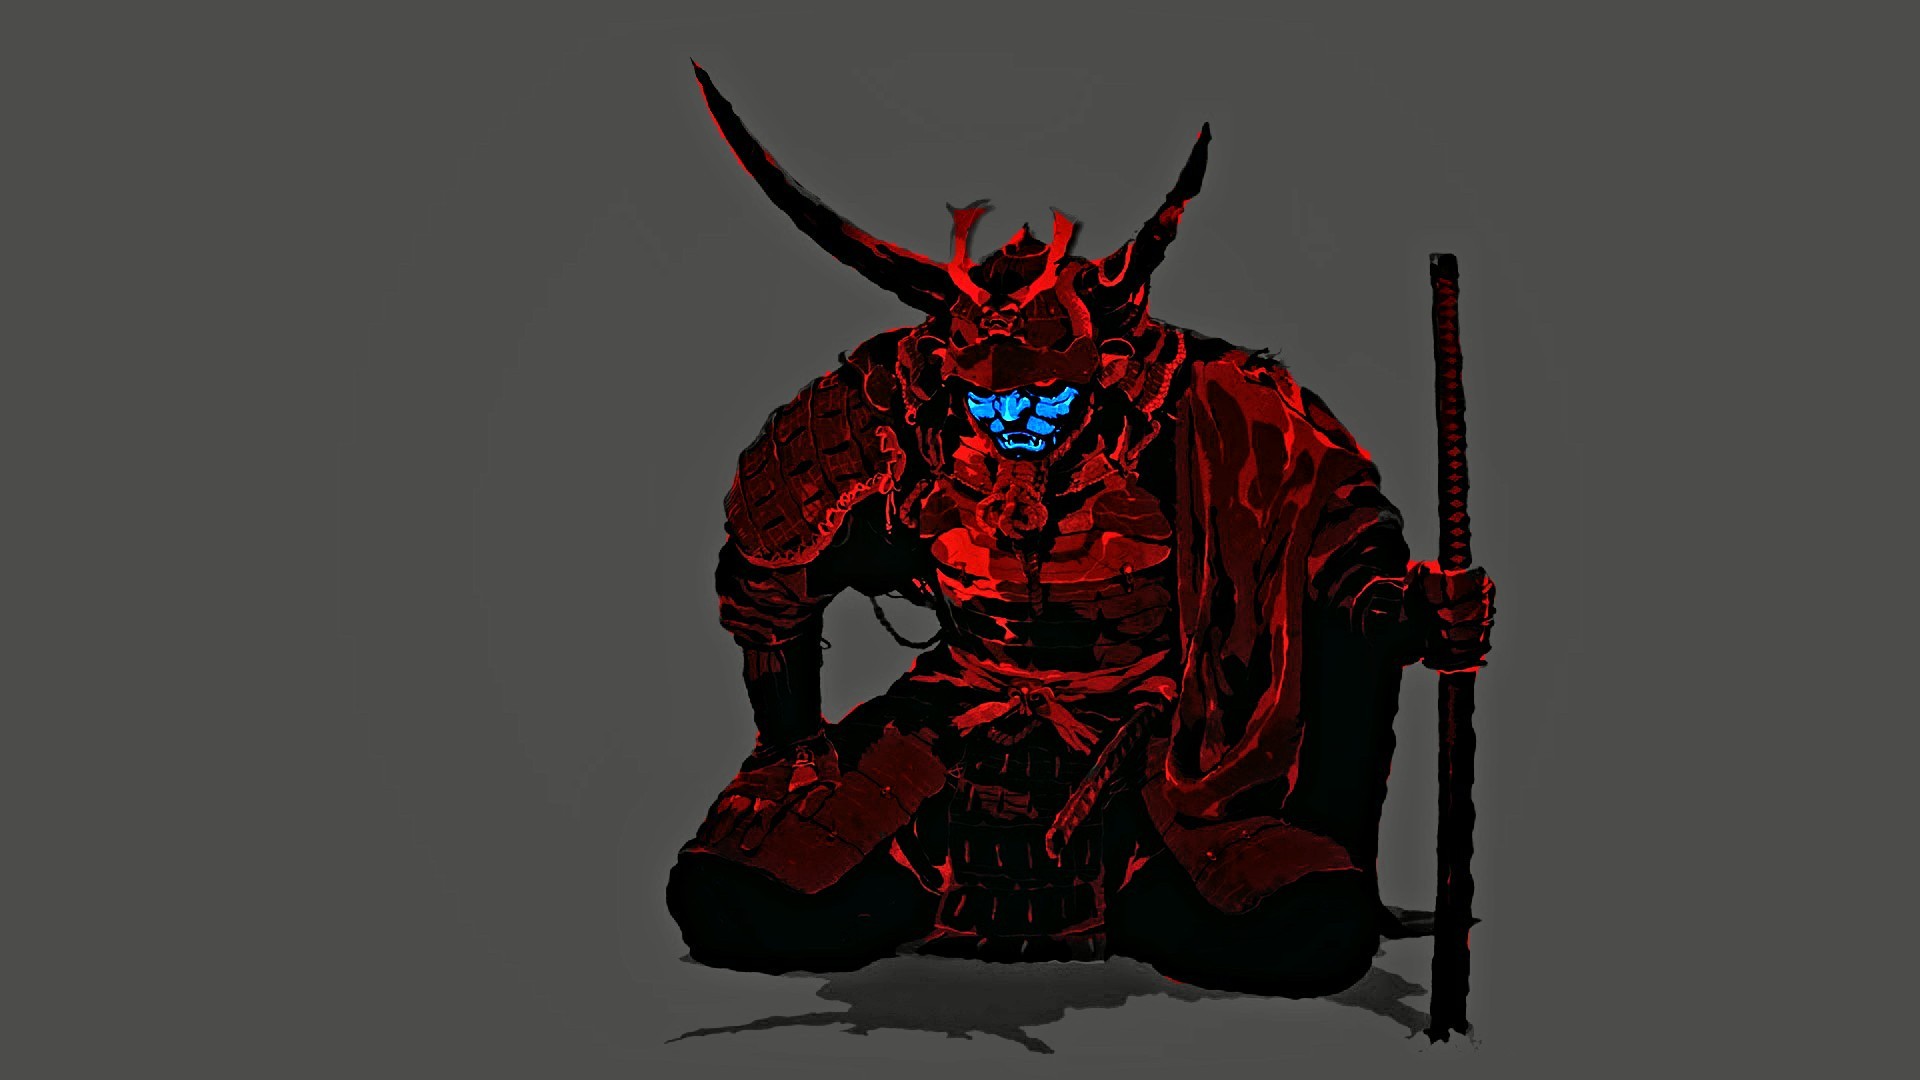 General 1920x1080 samurai red blue mask minimalism gray background fantasy art sword demon